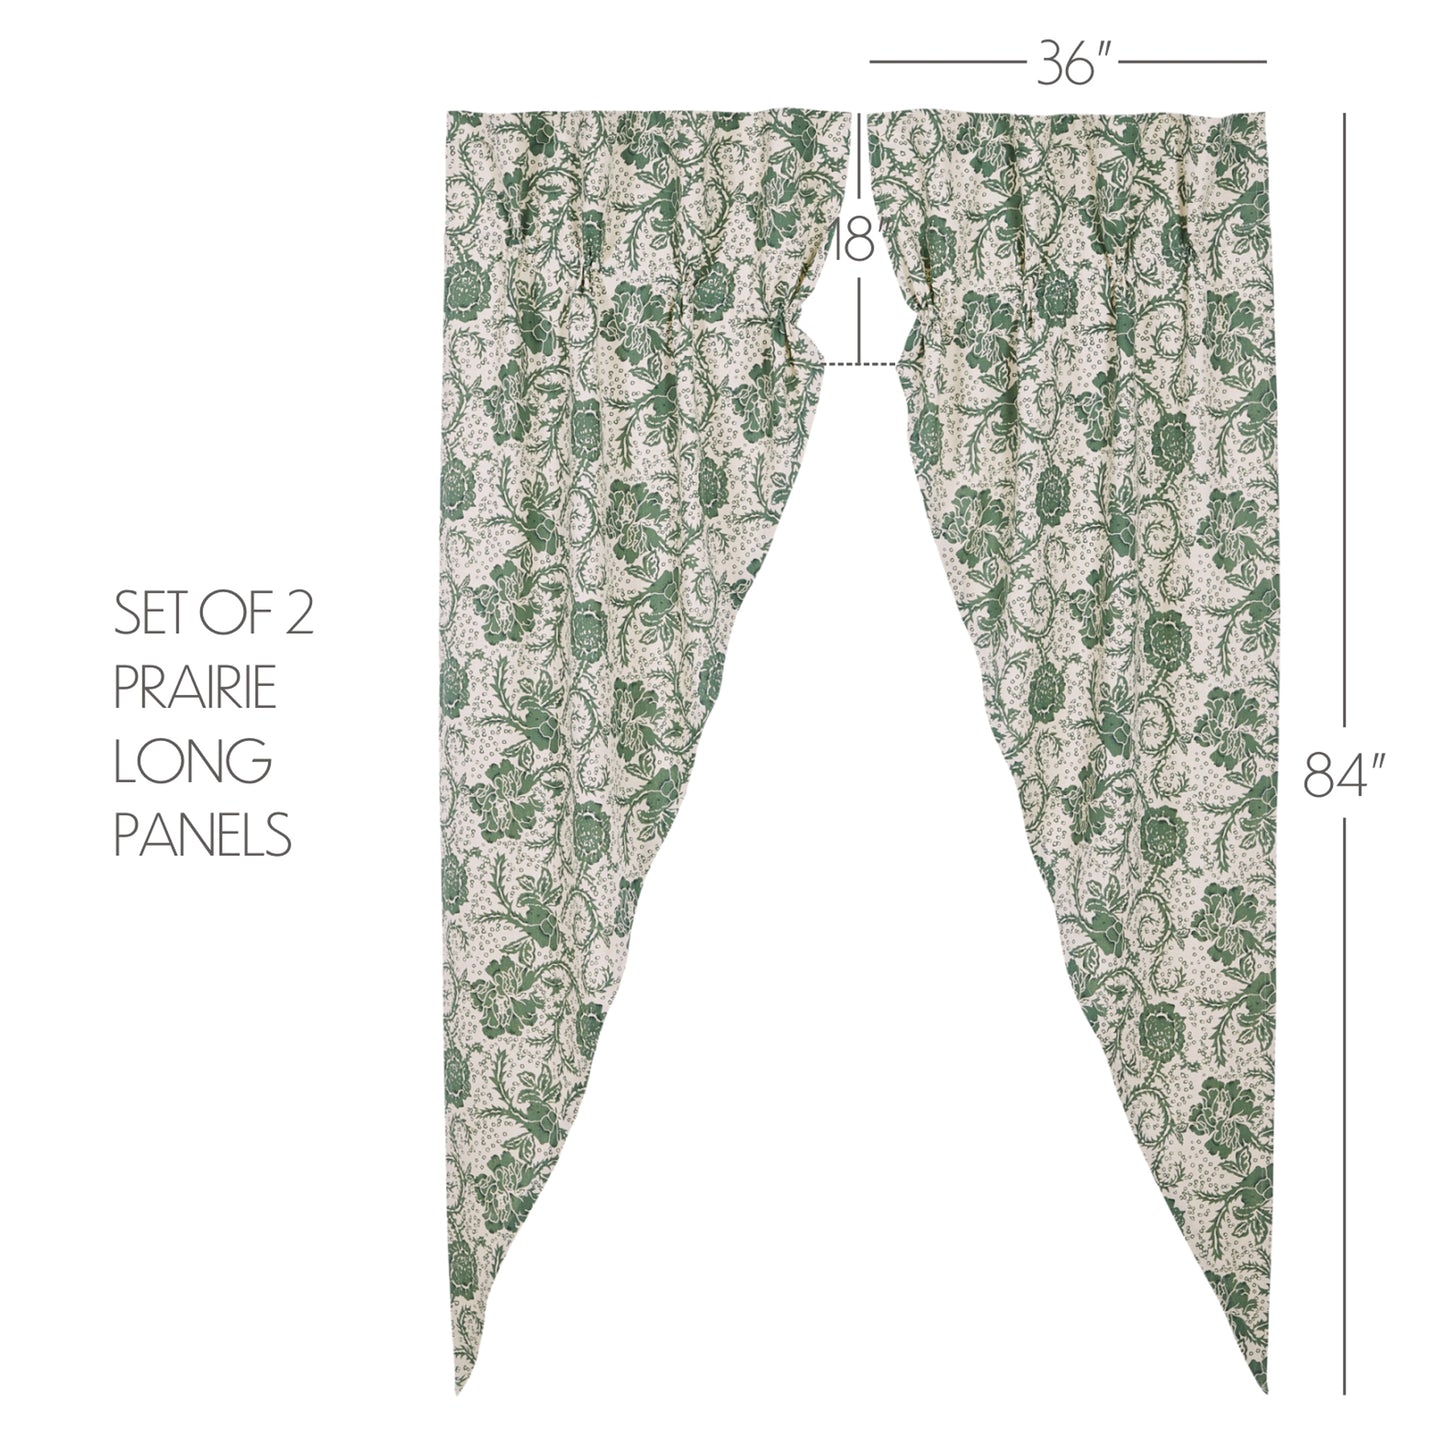 81226-Dorset-Green-Floral-Prairie-Long-Panel-Set-of-2-84x36x18-image-1